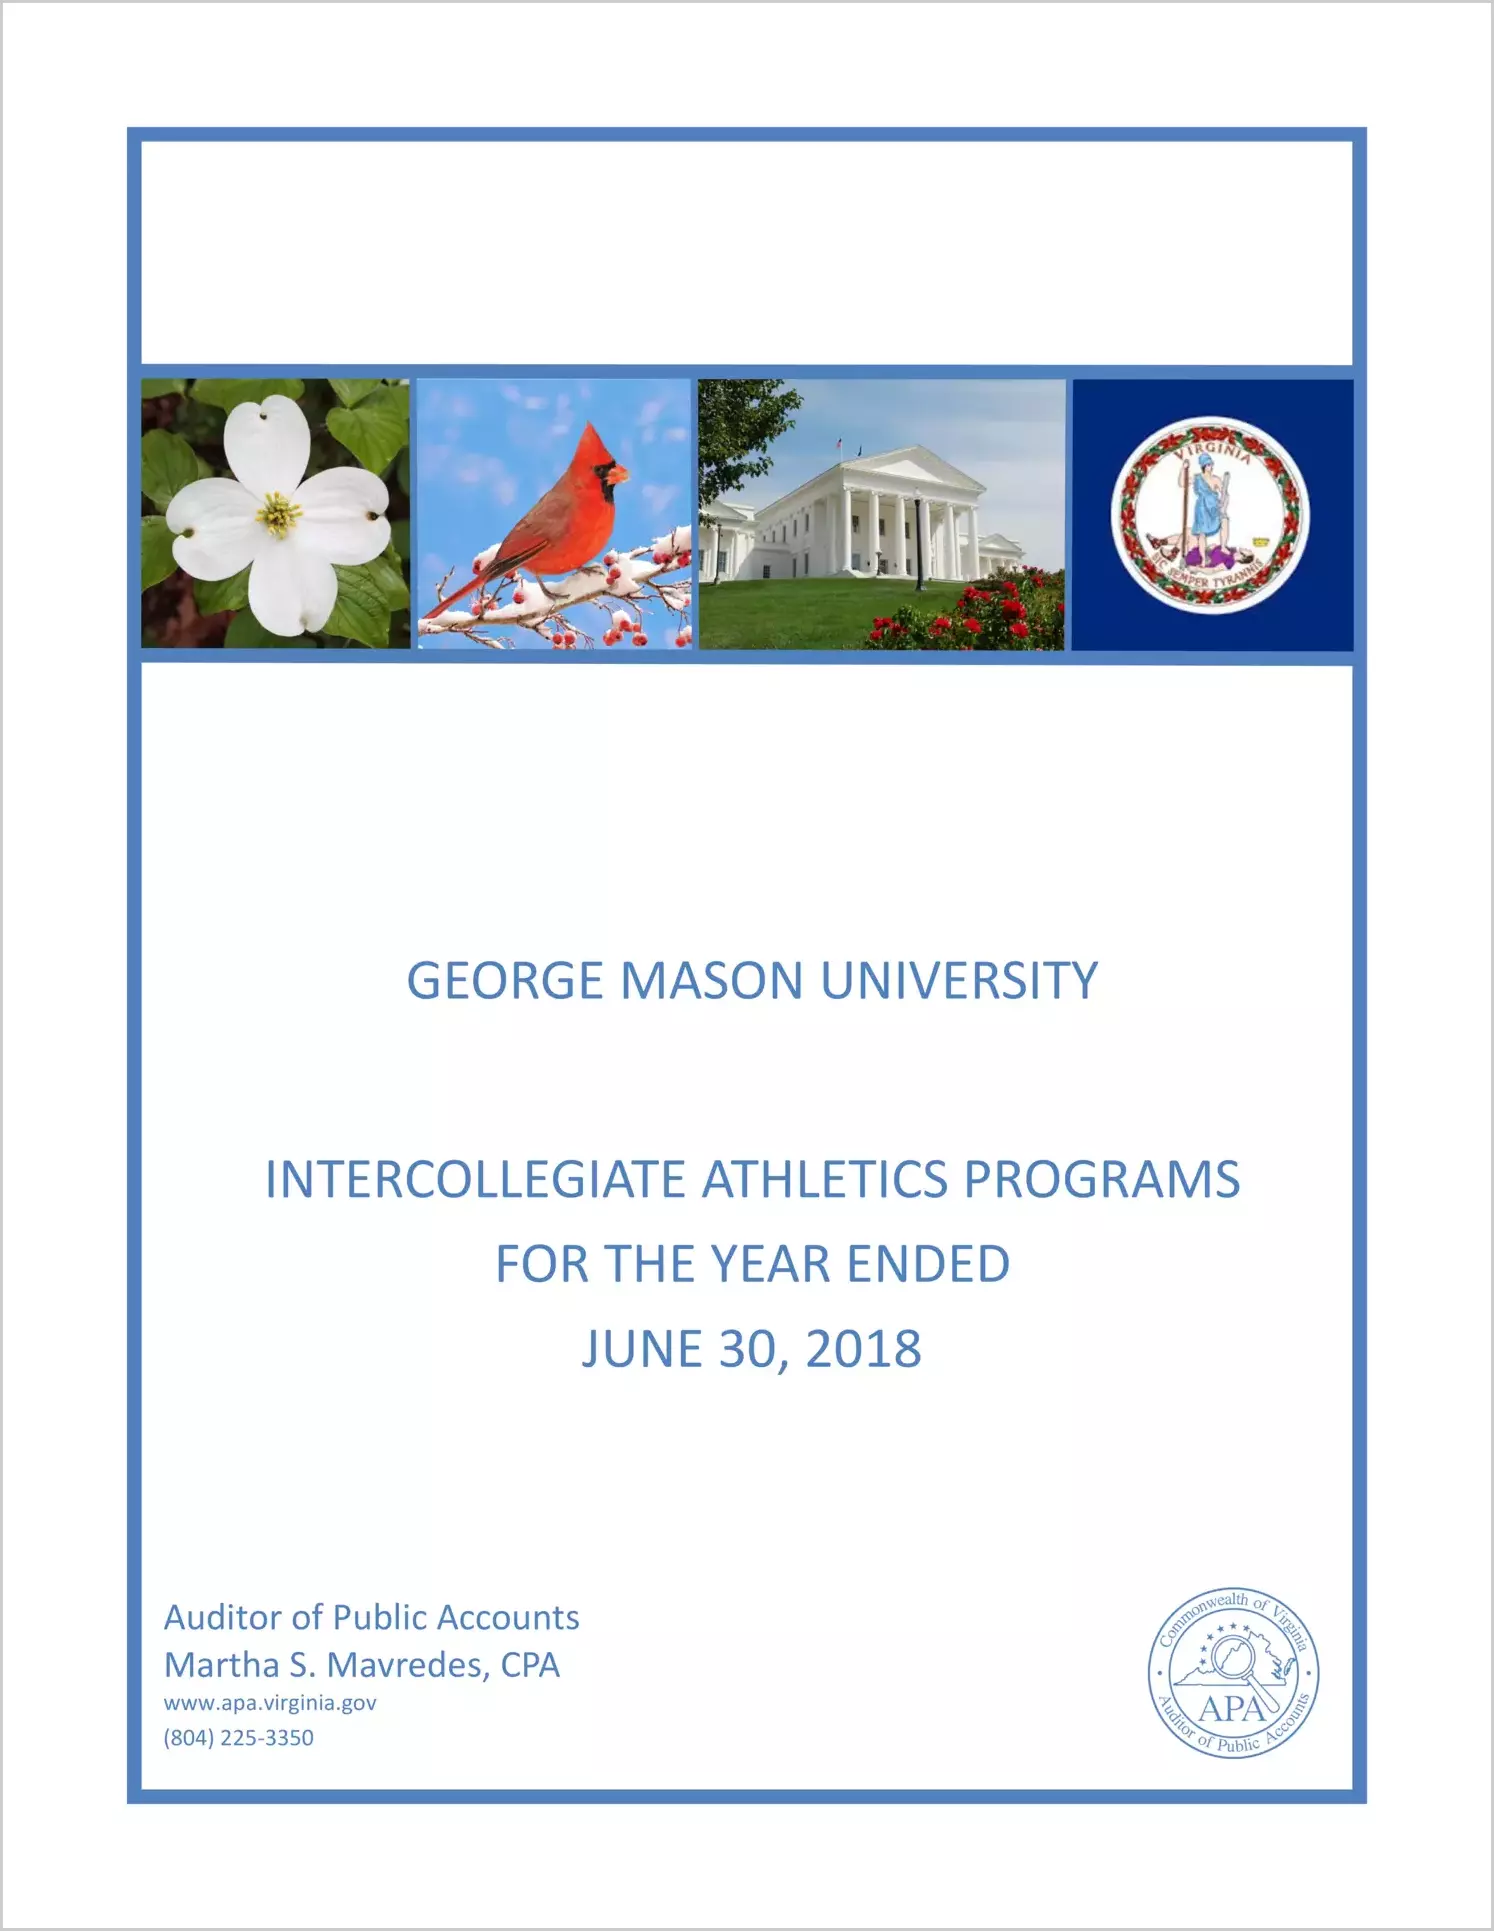 George Mason University Intercollegiate Athletics Programs for the year ended June 30, 2018